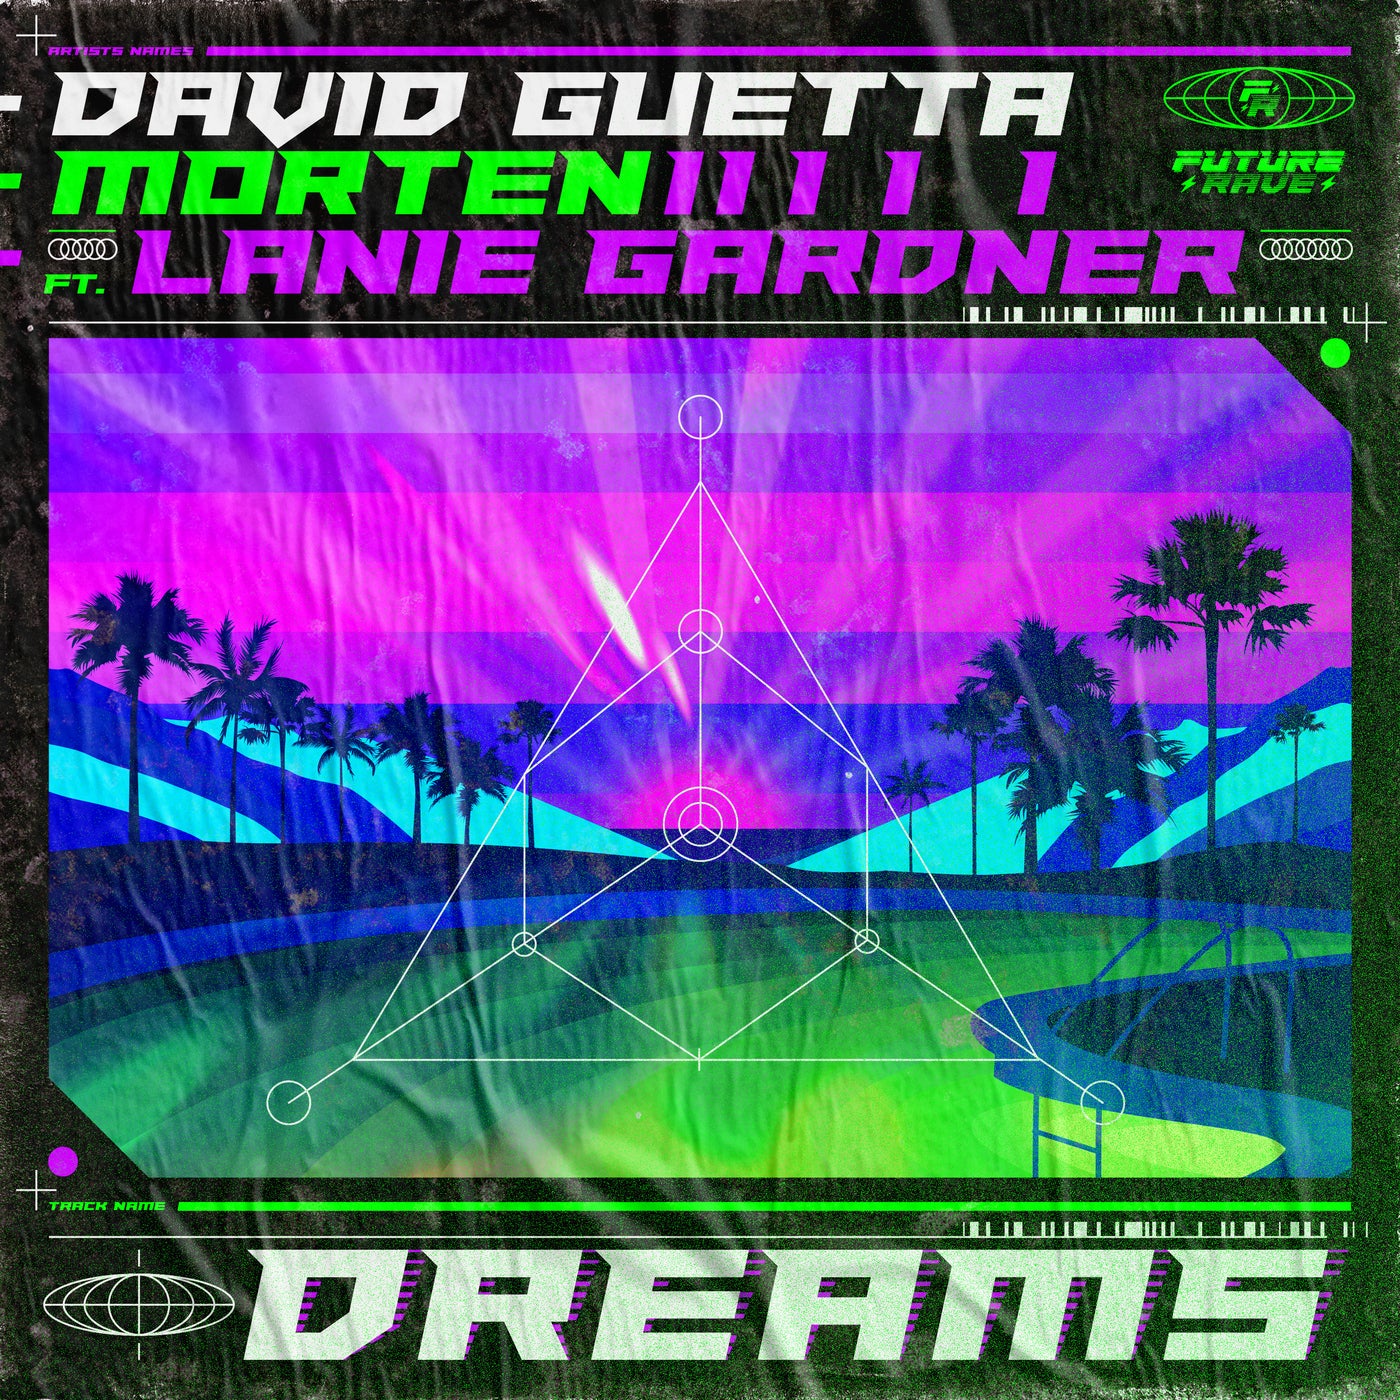 David guetta morten the truth. David Guetta Morten Dreams. Lanie Gardner Dreams. David Guetta 2023. David Guetta x Morten Dreams Extended.